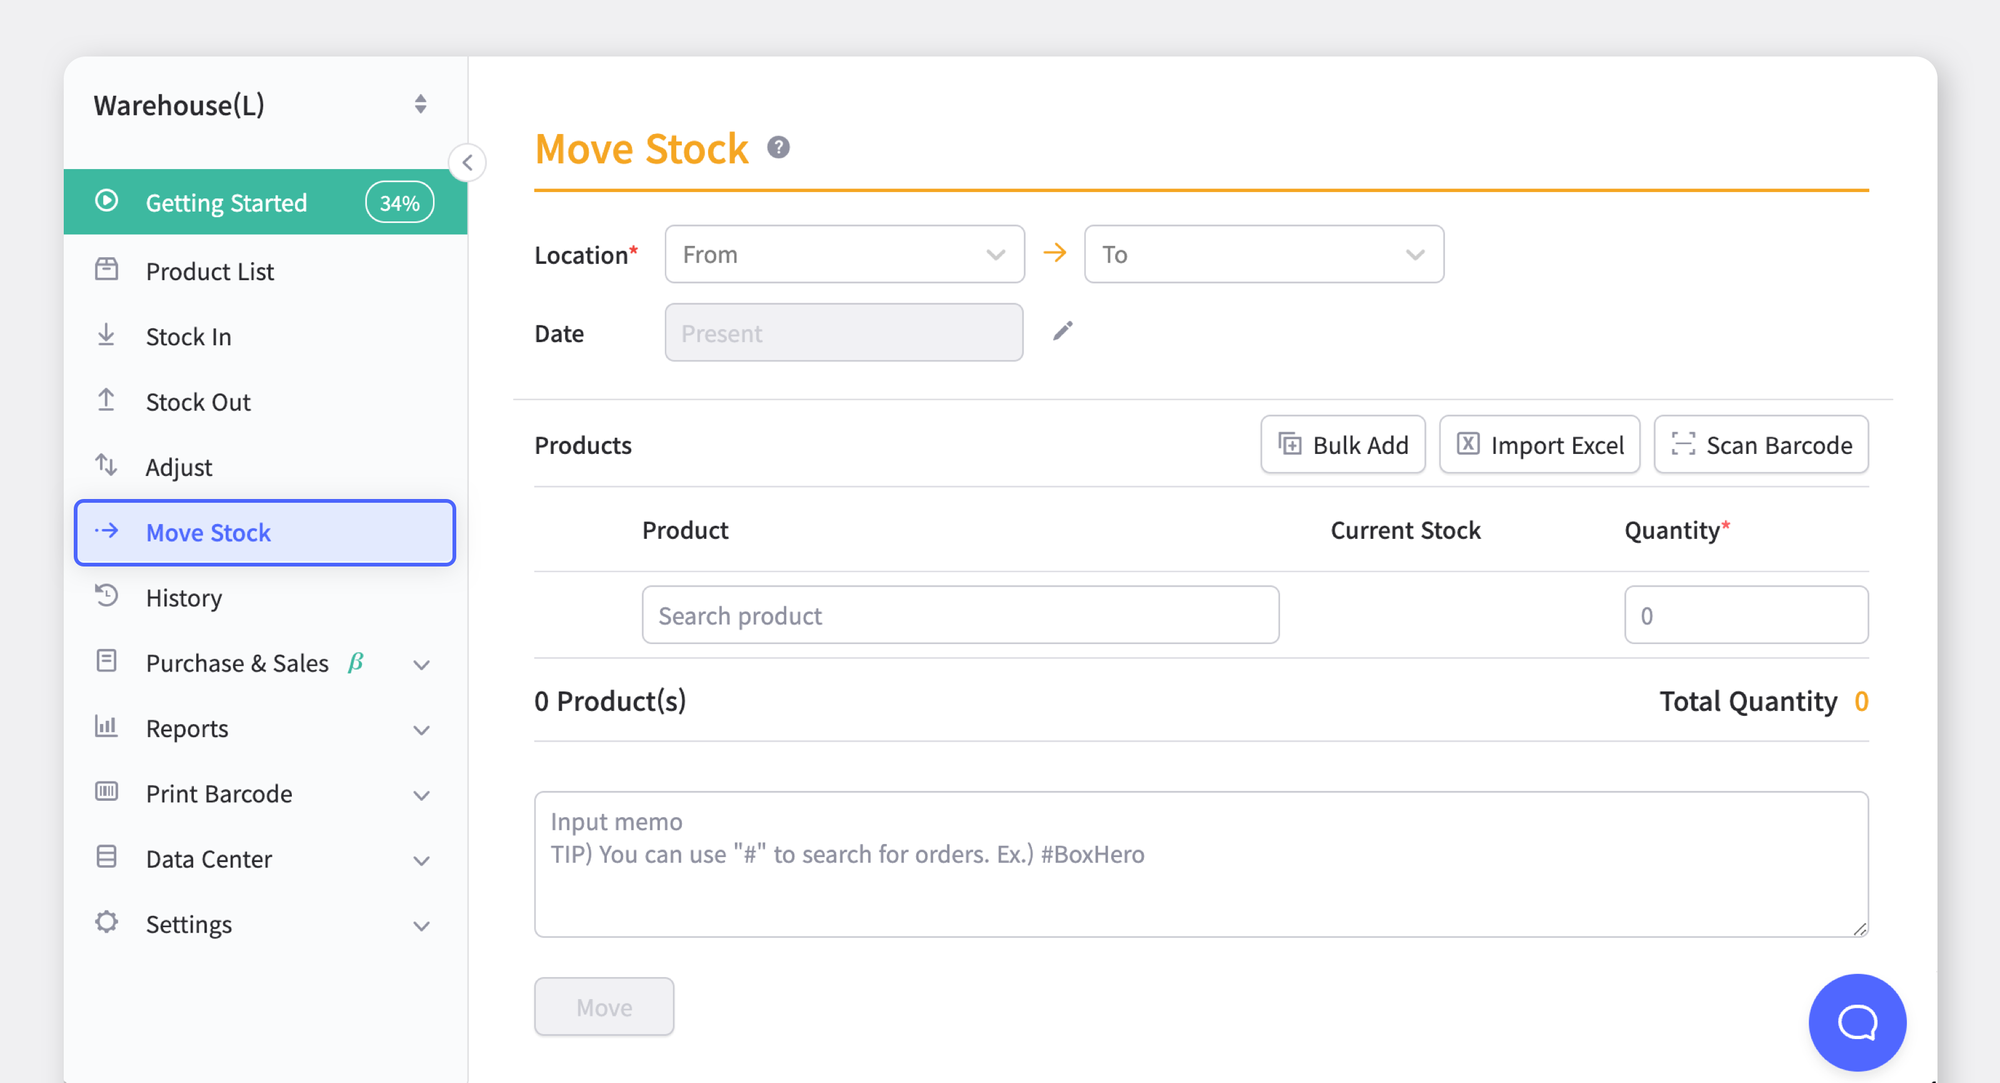 "Move Stock" menu on the BoxHero app